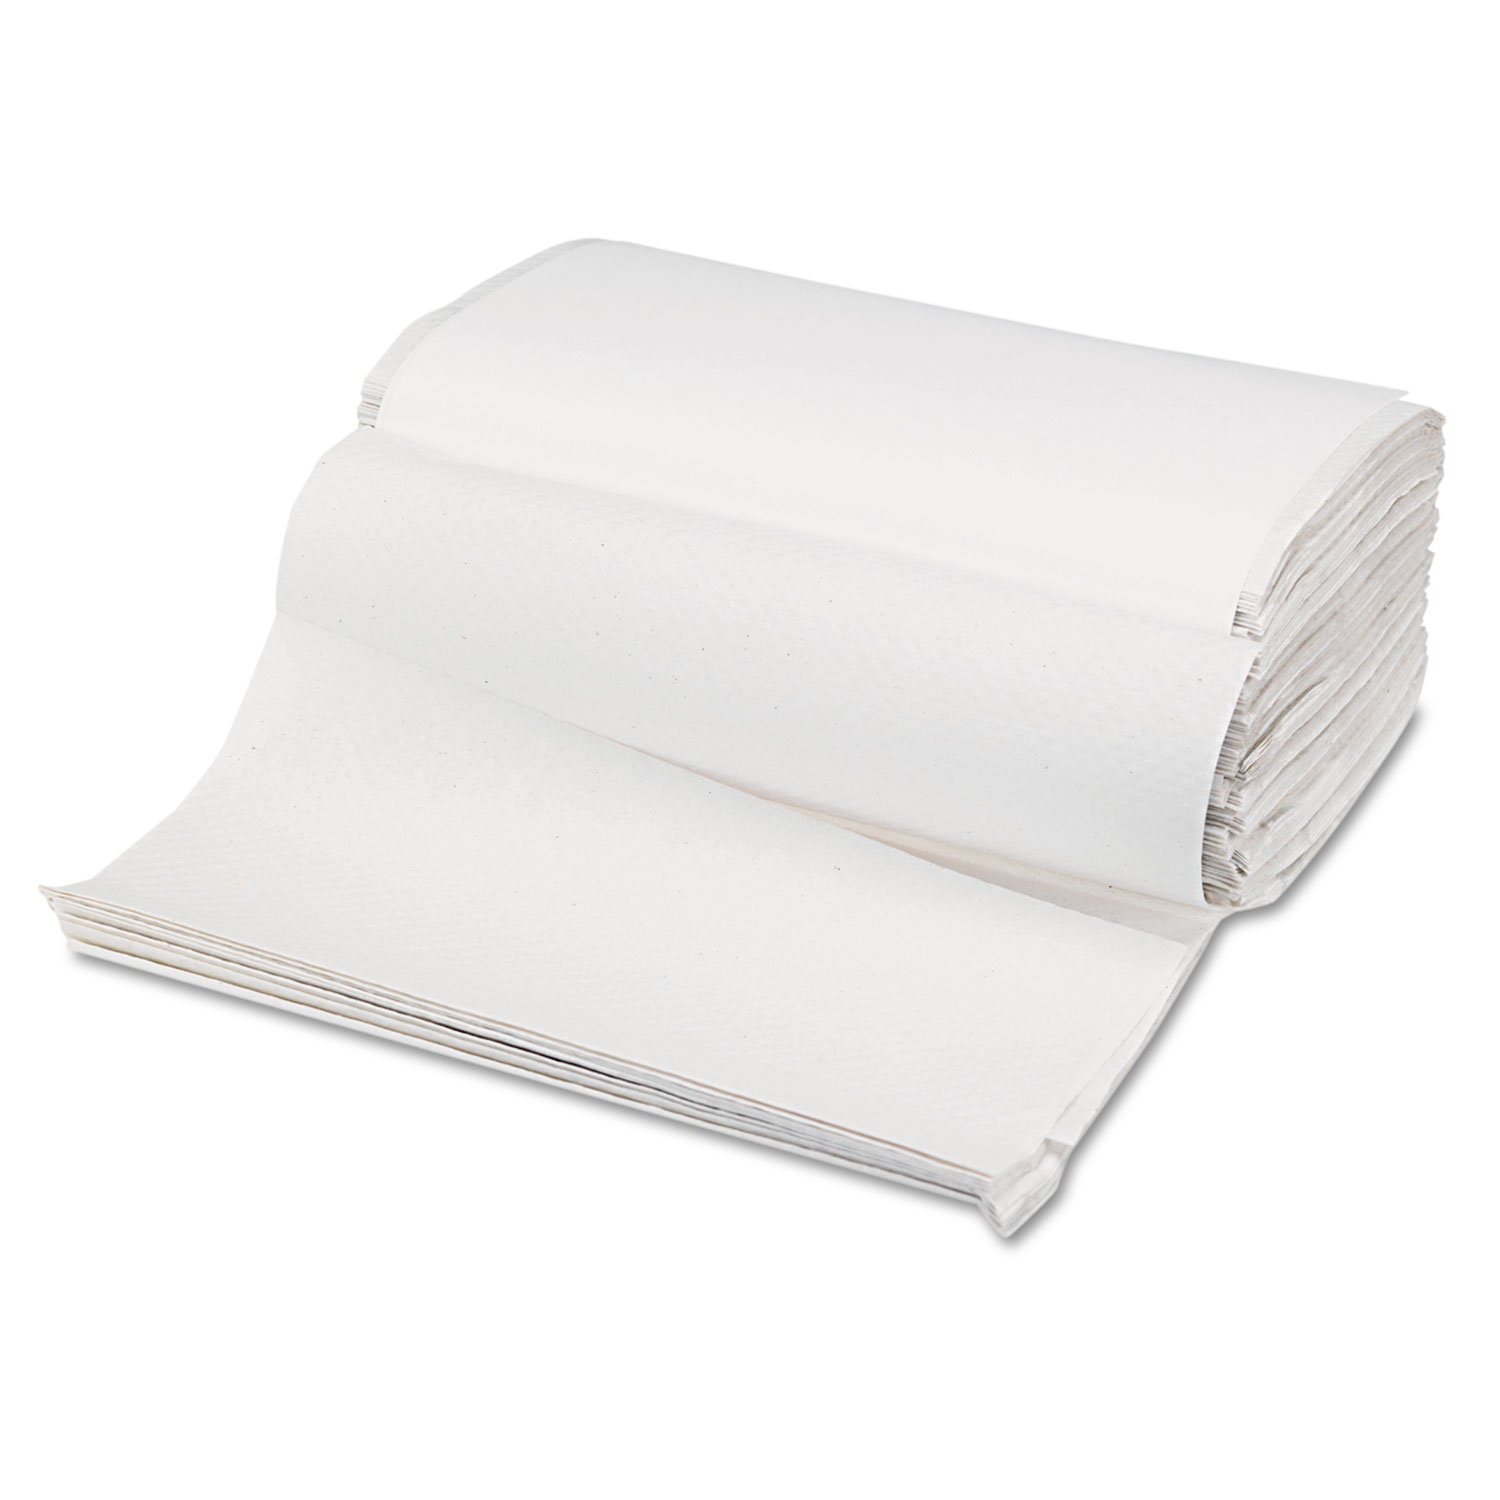 Singlefold Paper Towels, White, 9 x 9 9/20, 250/Pack, 16 Packs/Carton